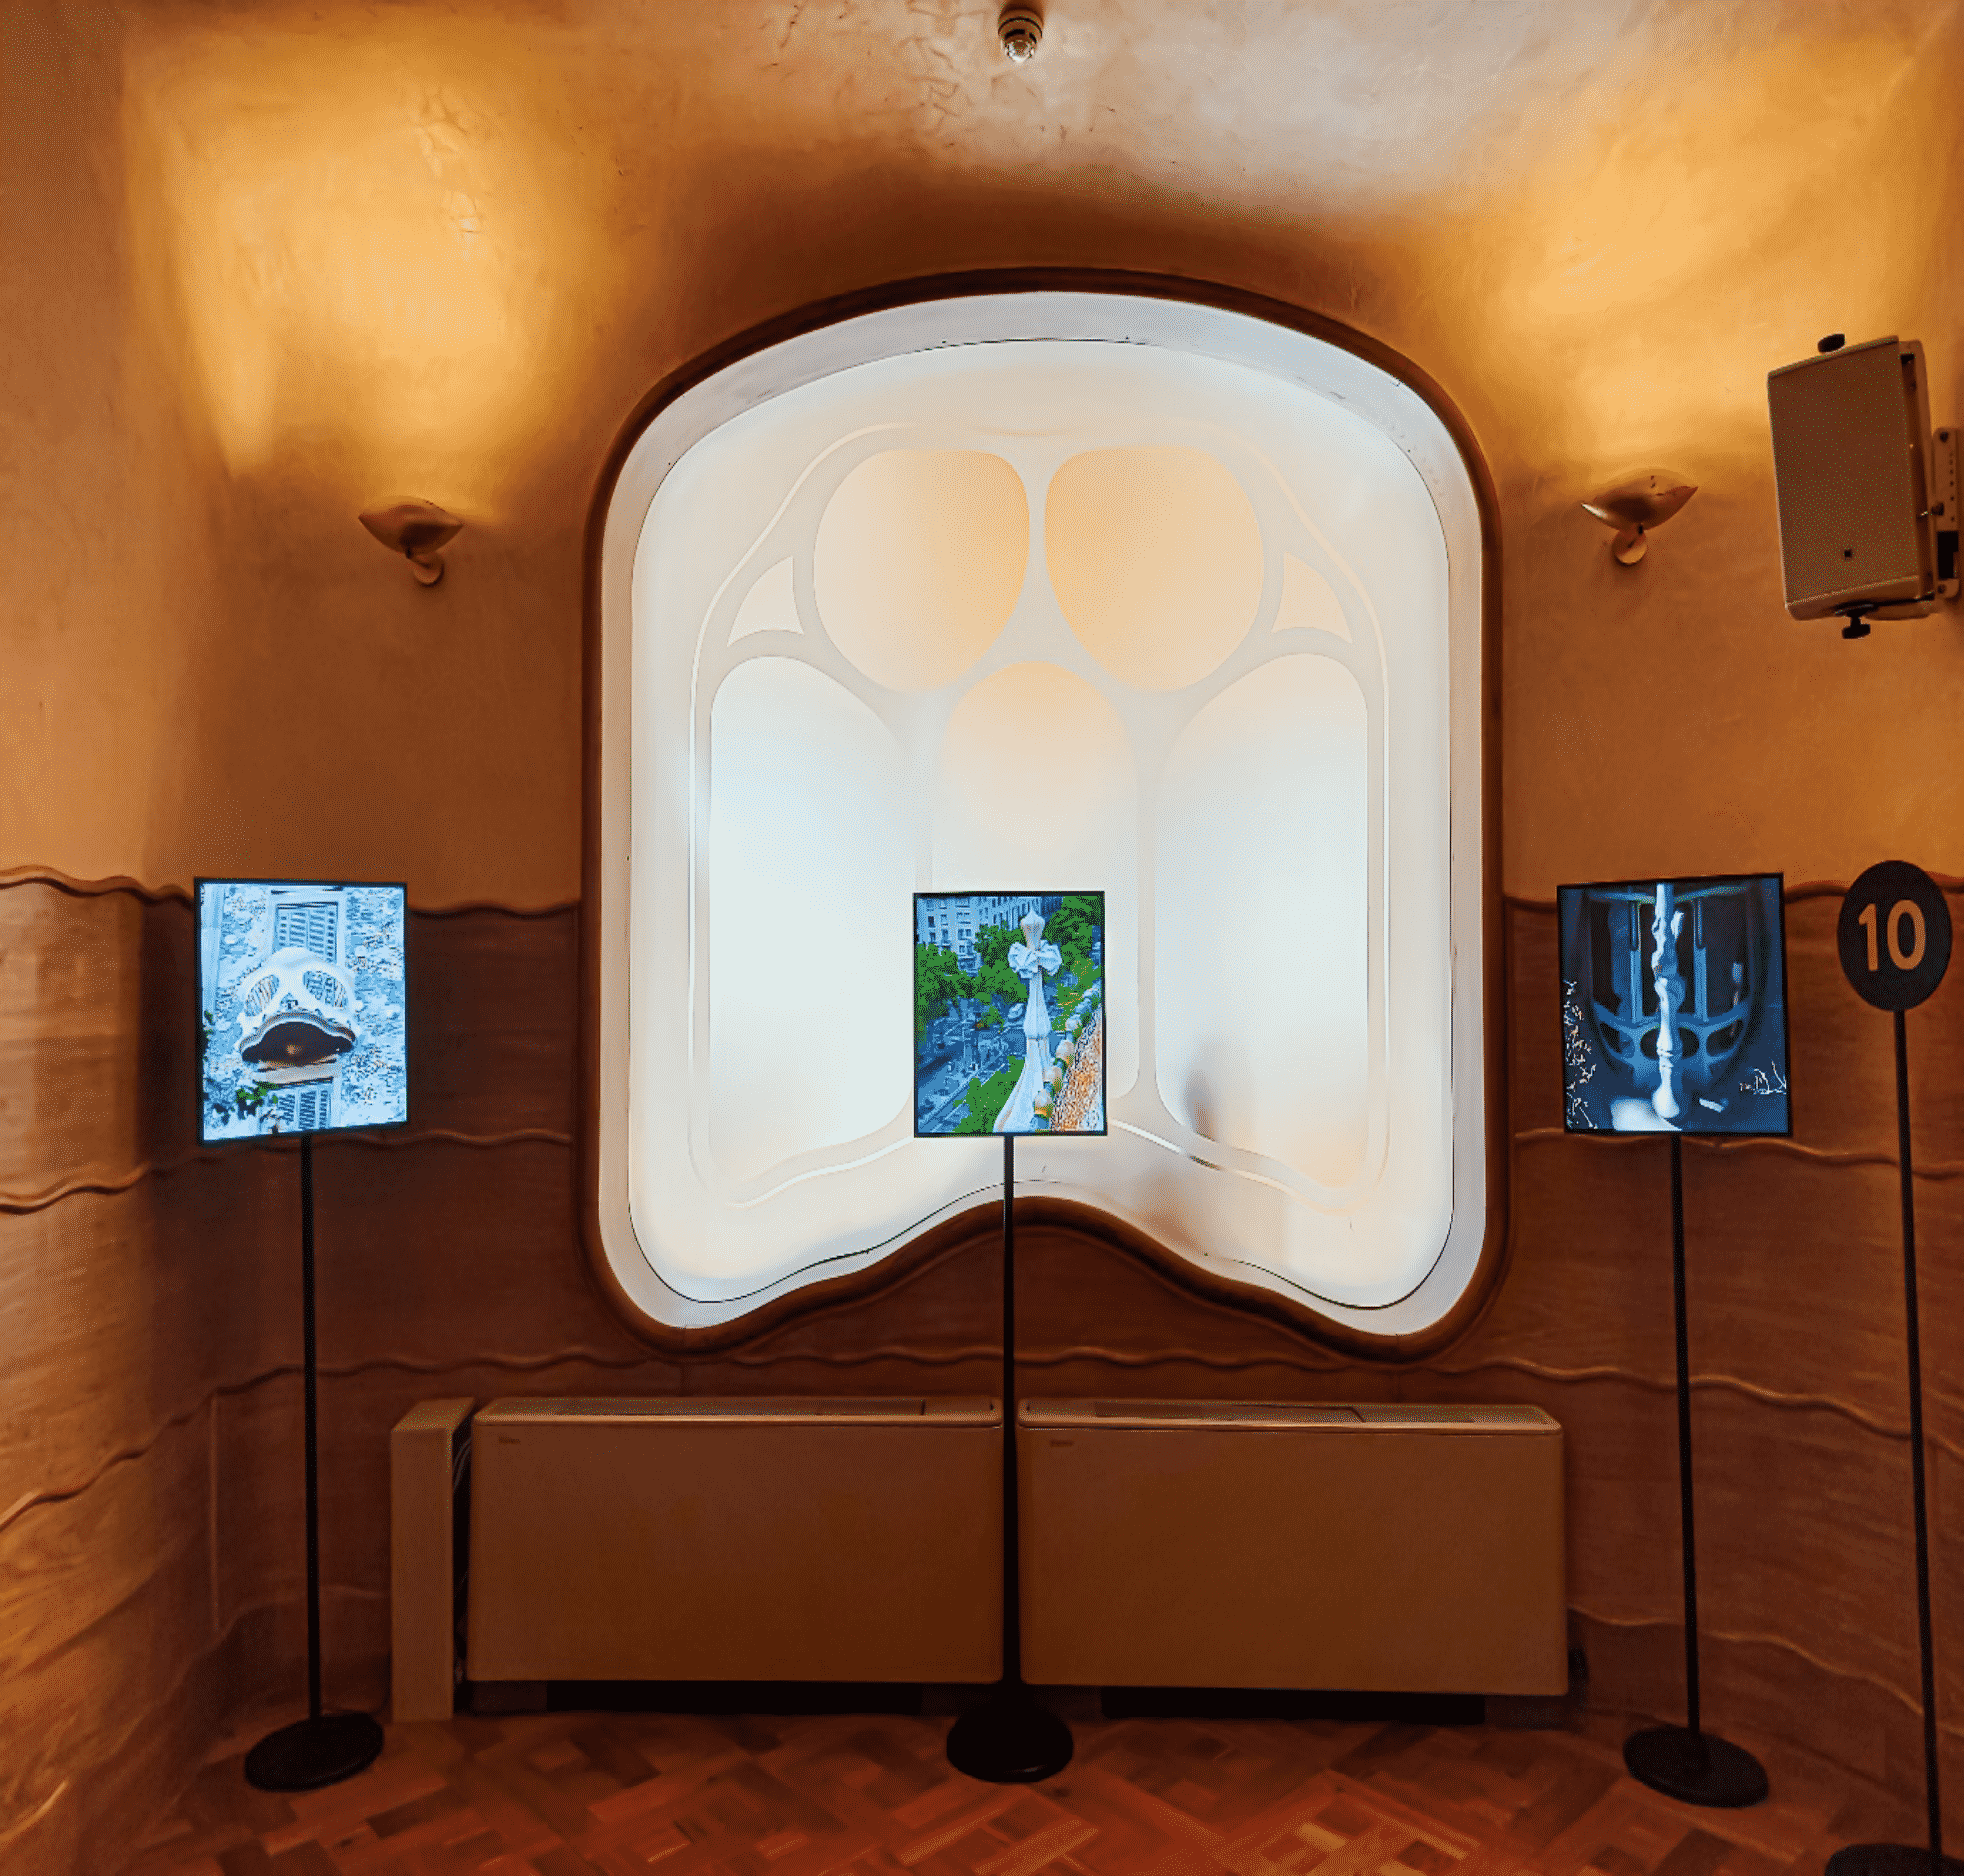 MOPIC, MOPIC Co reinterprets Gaudi’s ‘Casa Batlló&#8217; architecture as immersive content, Startup World Tech